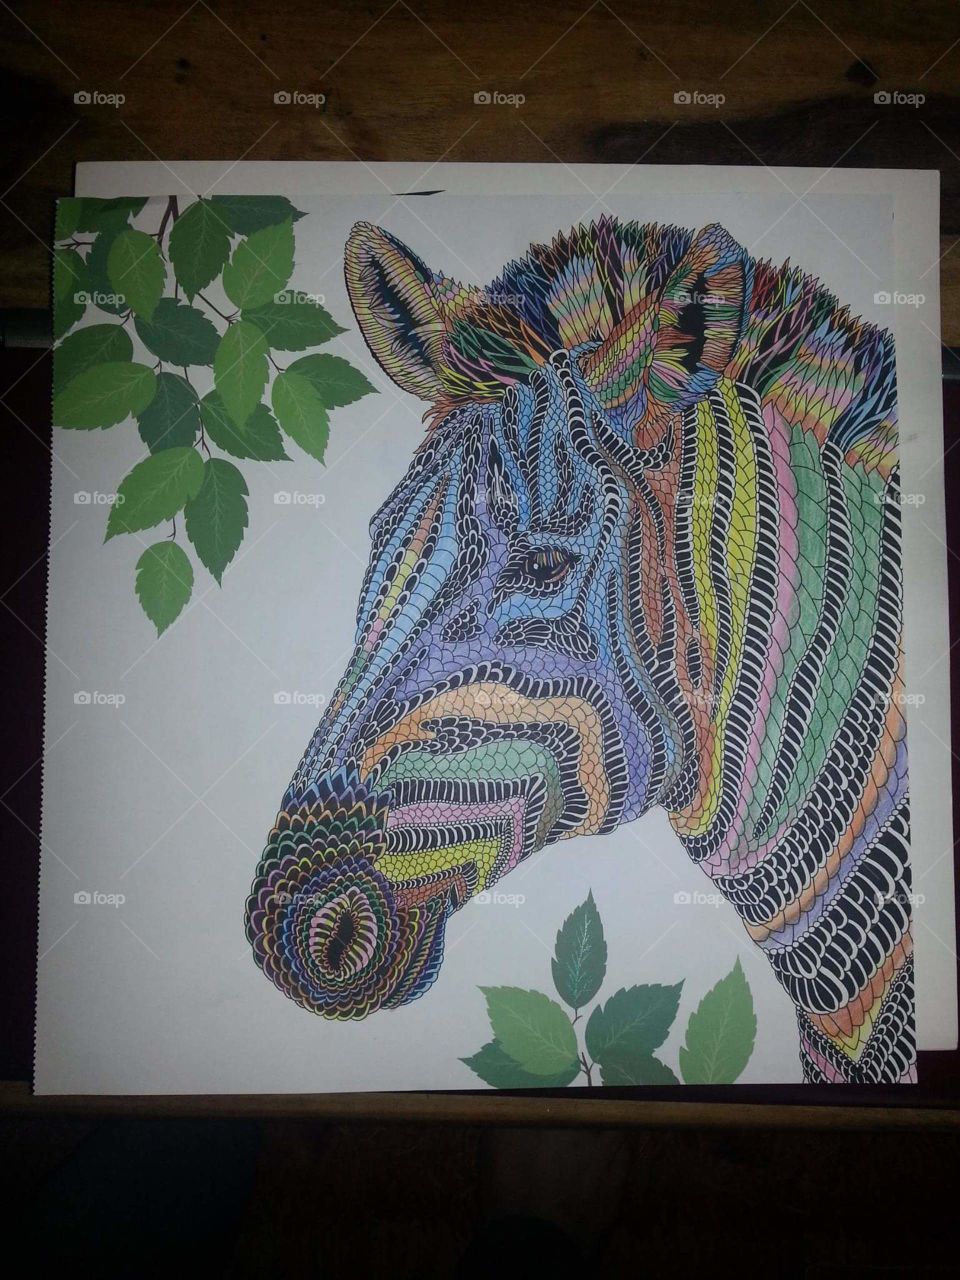 My zebra painting